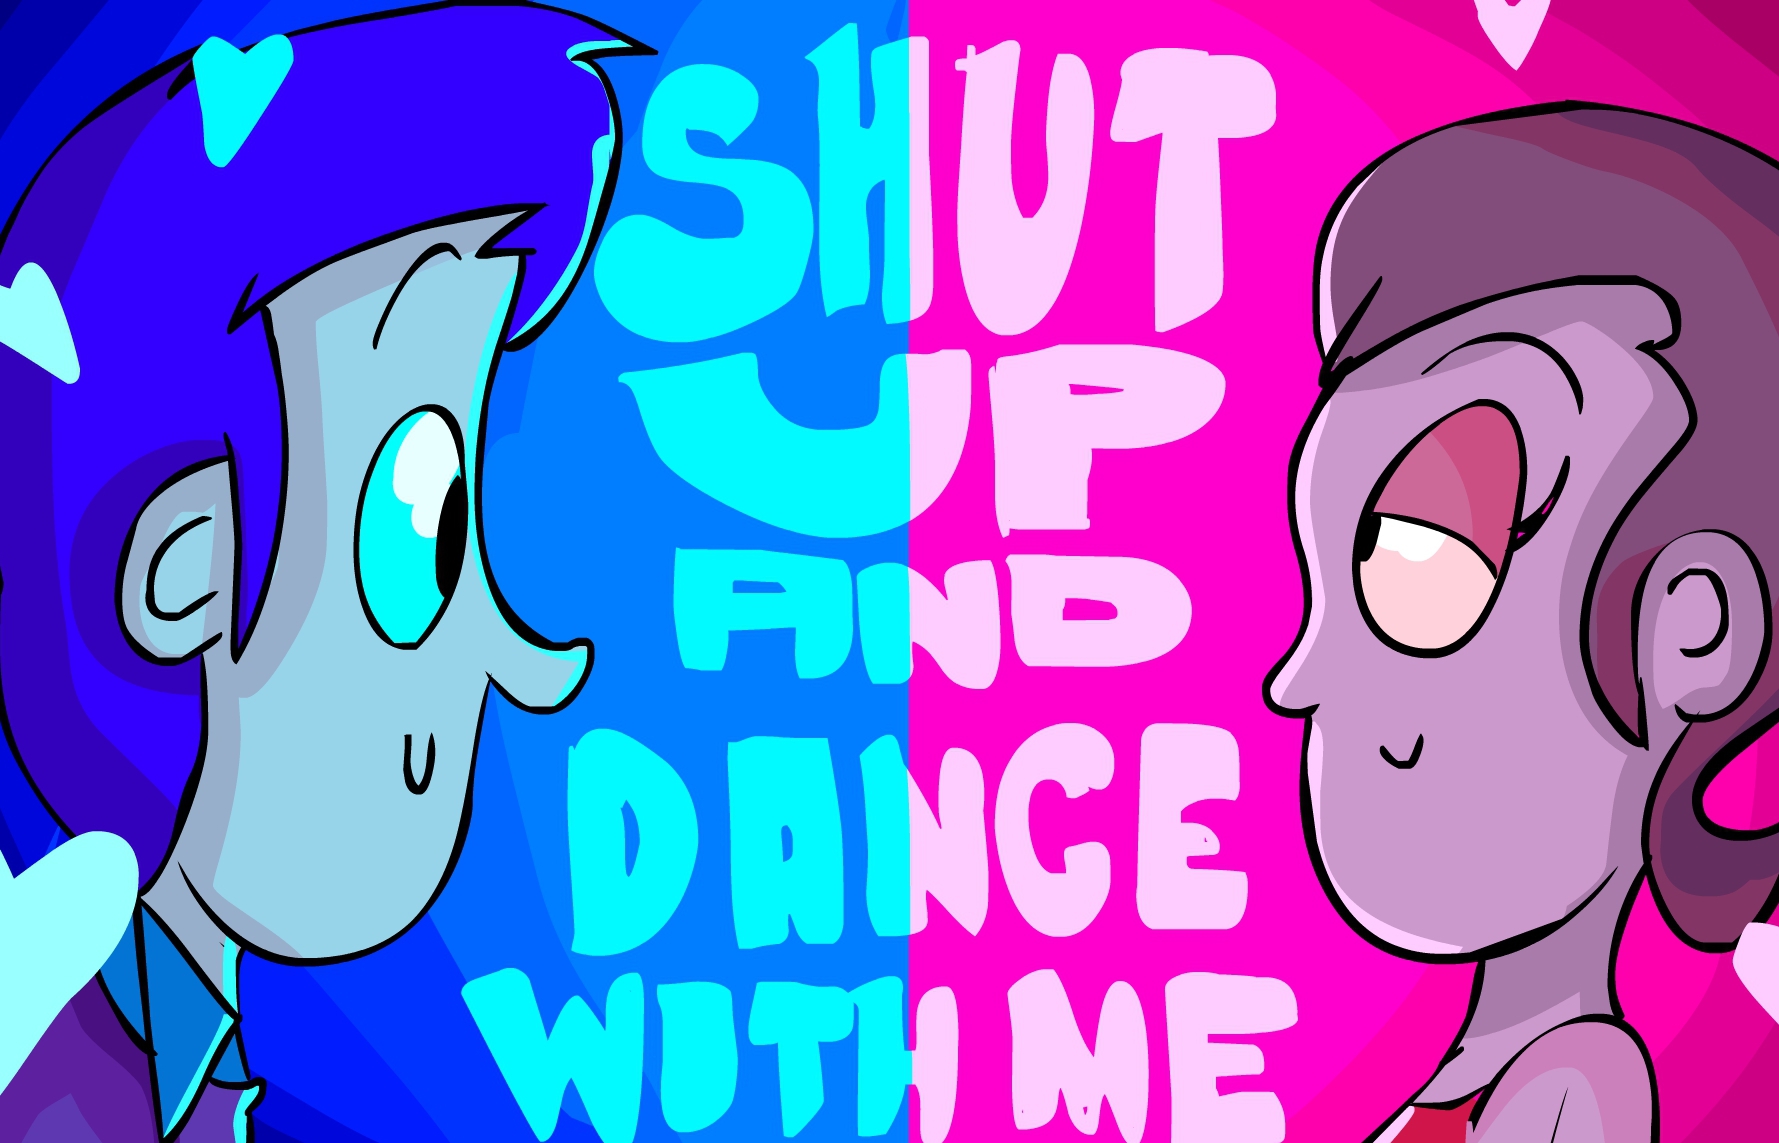 shup and dance